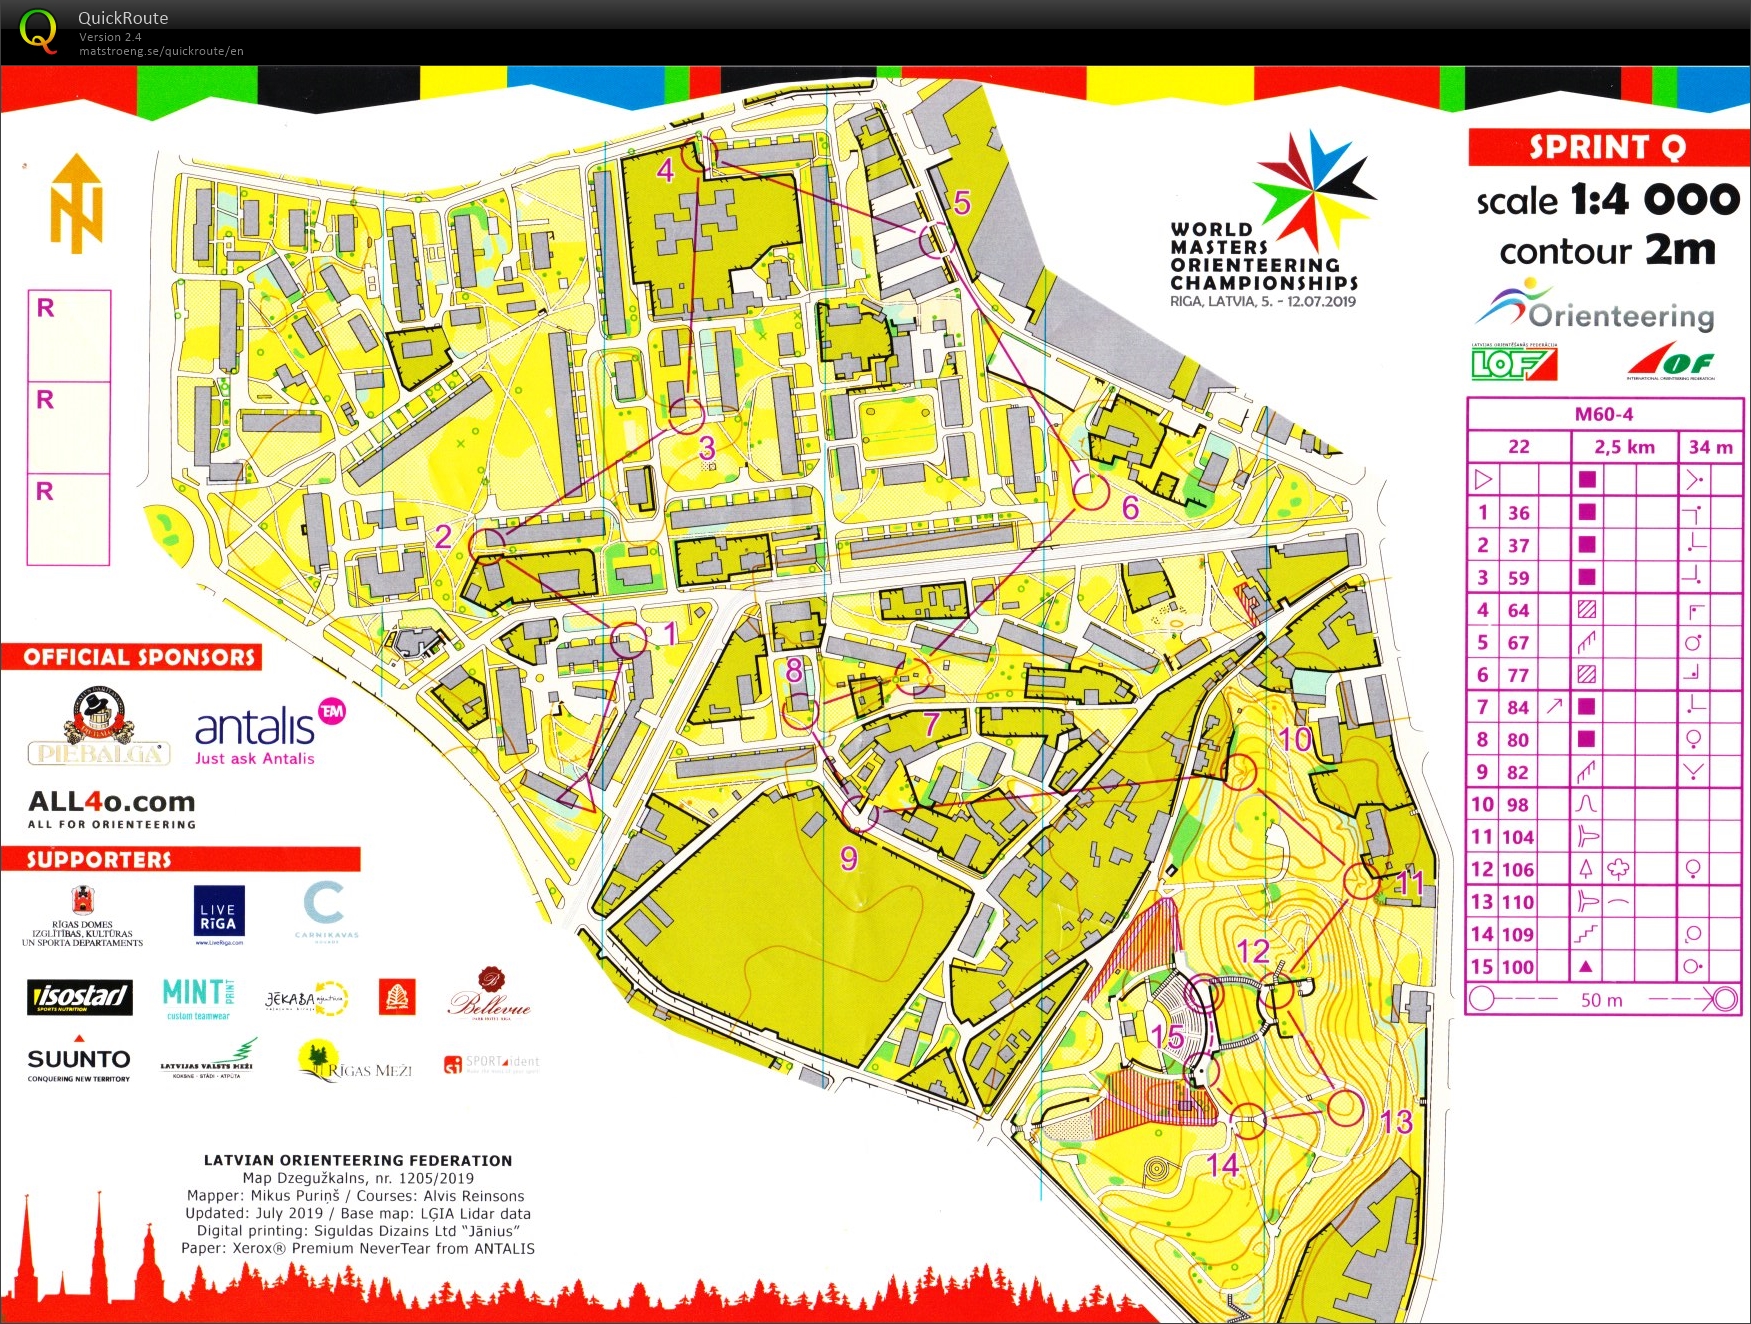 WMOC i Riga - sprintkvalifisering, M60-4 (06/07/2019)